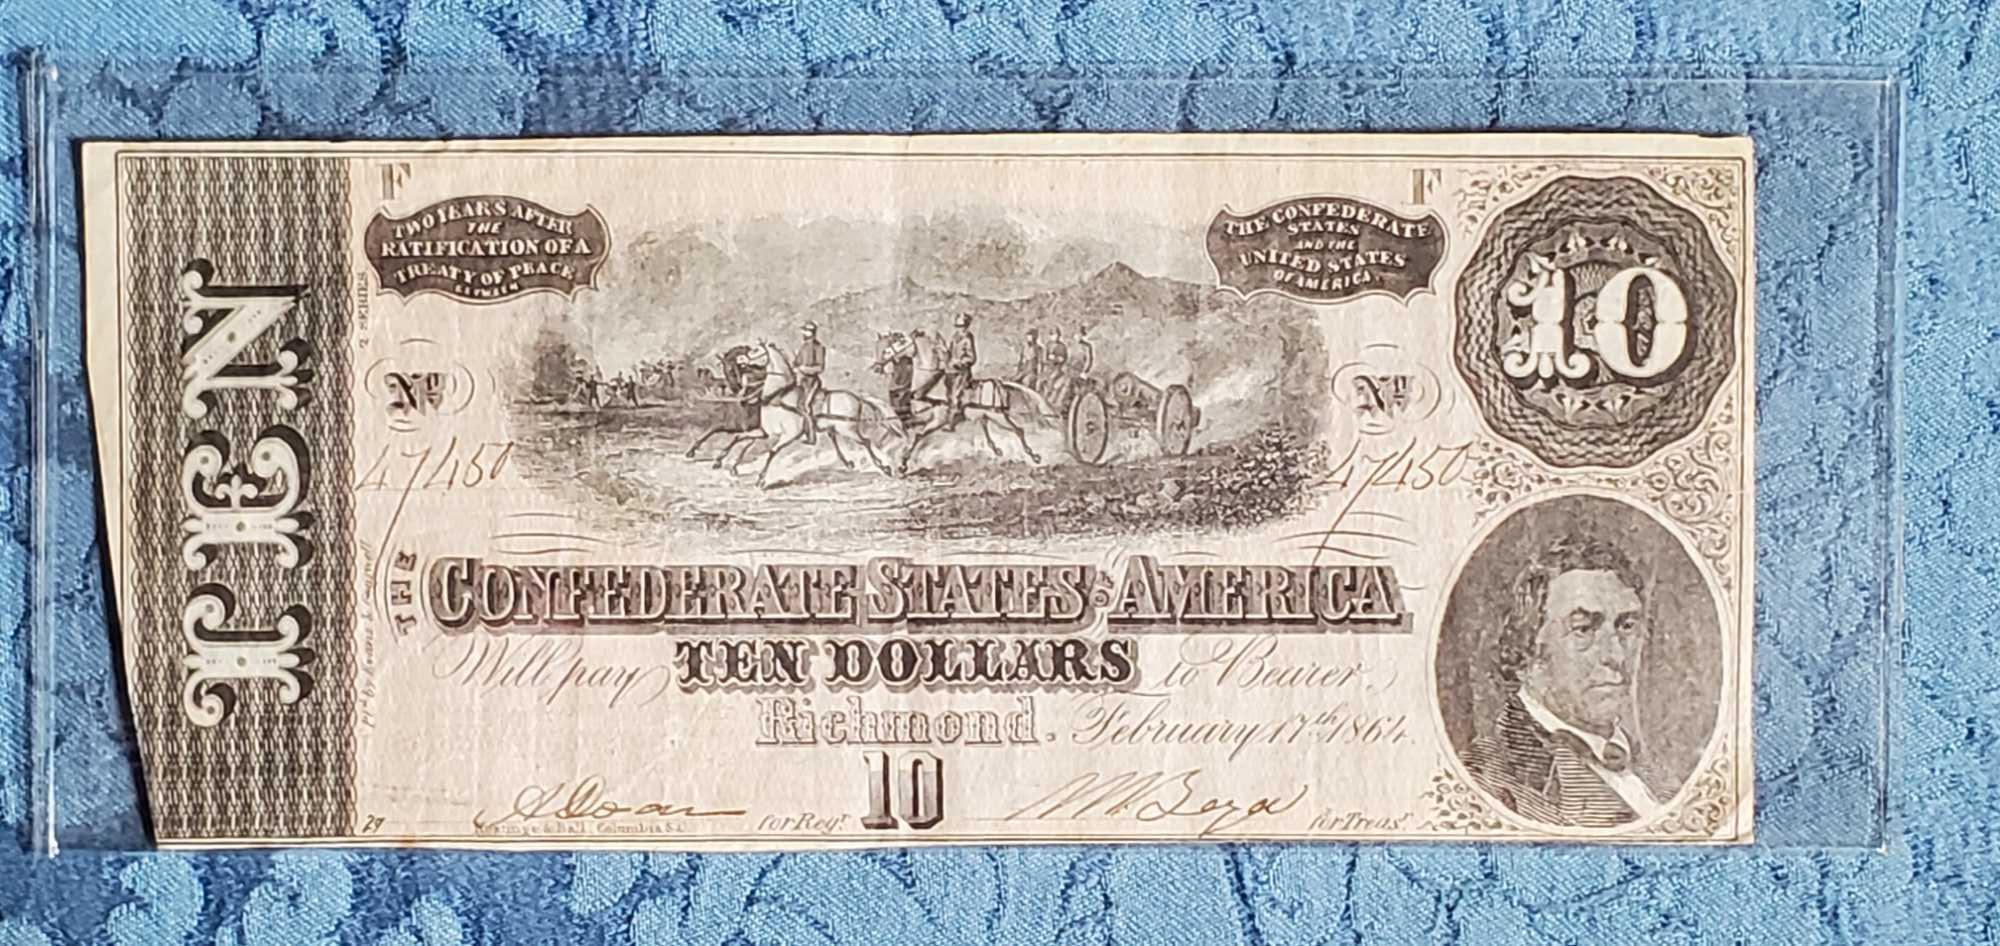 4 1864 $10 Confederate States of America Notes